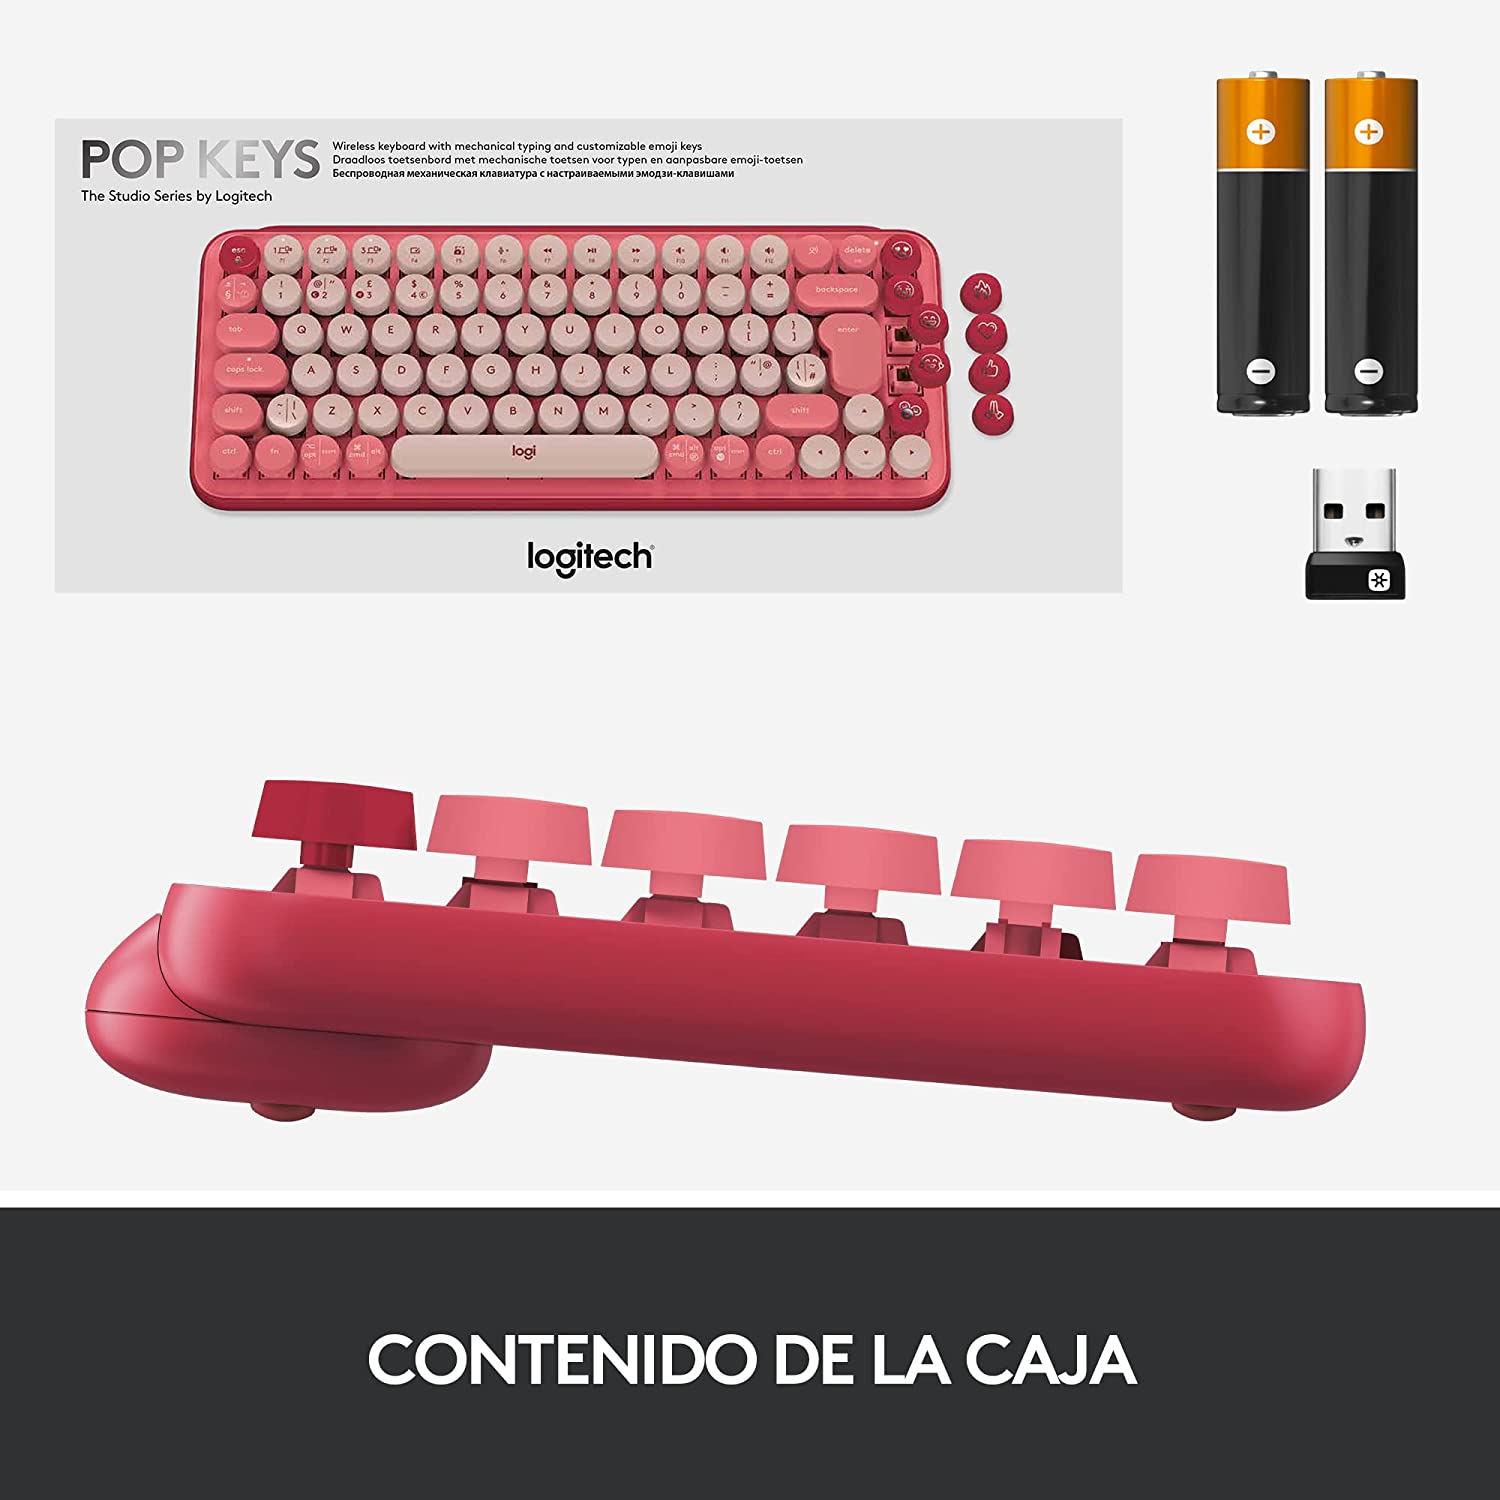 Teclado Inalámbrico Logitech Pop Keys (Español) - Rosa/Rojo (Heartbreaker)